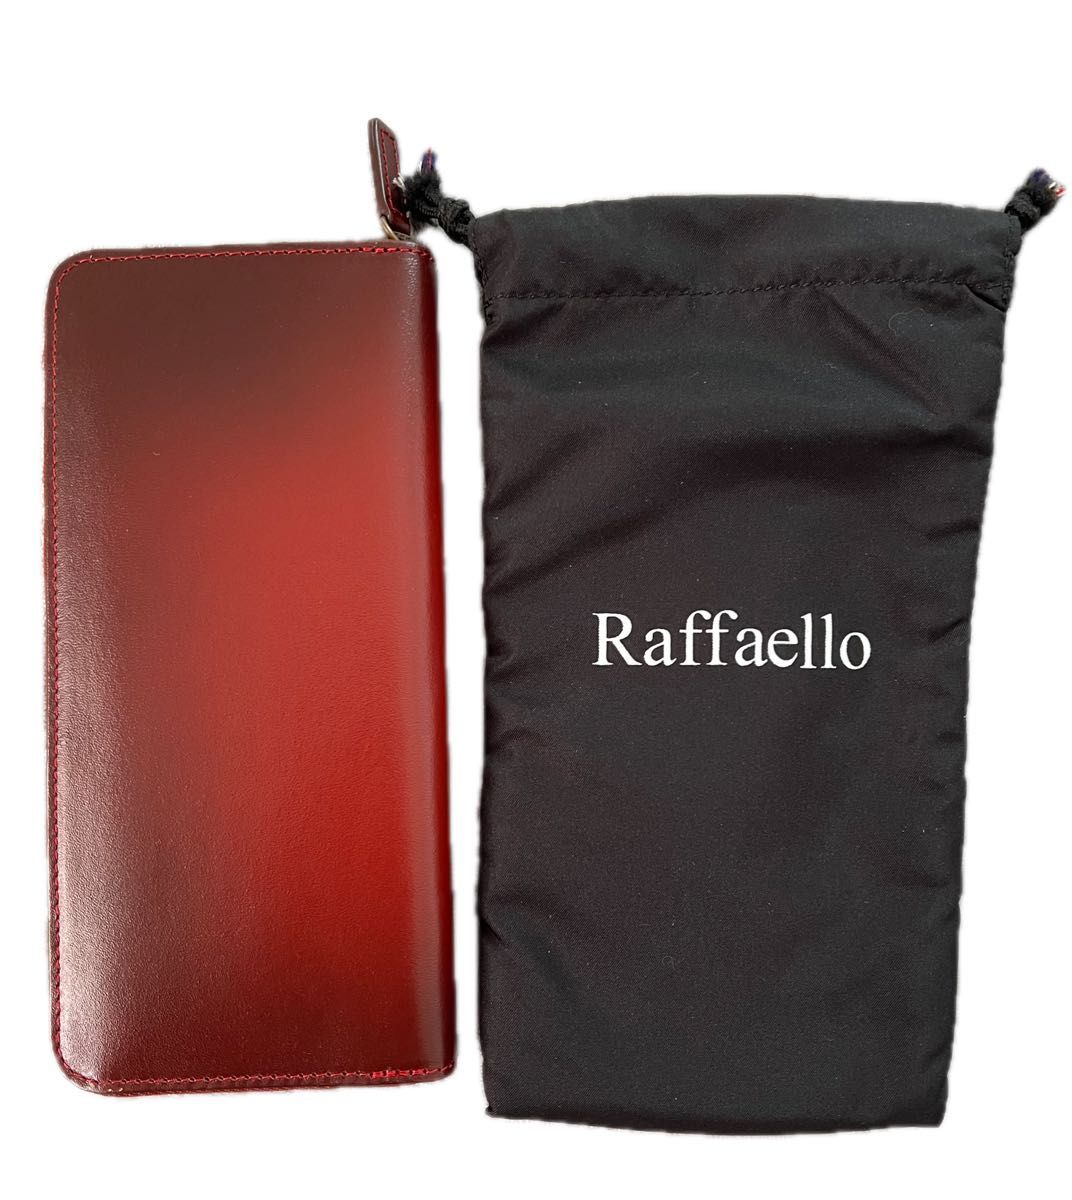 [Raffaello] (ラファエロ) 一流の革職人が作る スフマート製法で染色したメンズラウンドファスナー長財布 ワインレッド